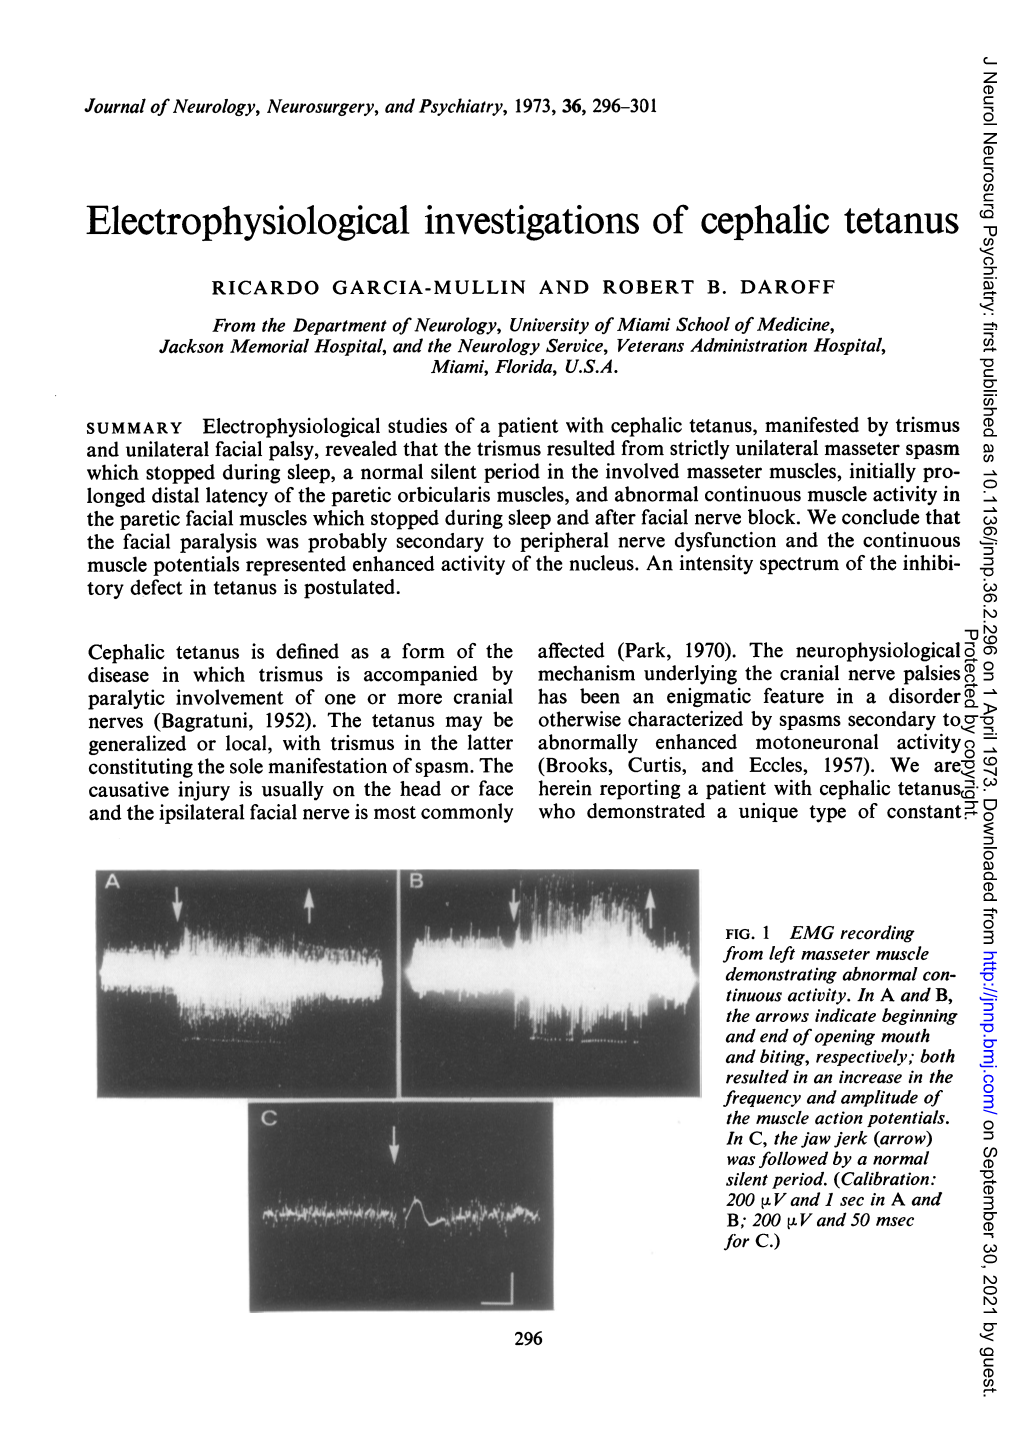 Electrophysiological Investigations of Cephalic Tetanus